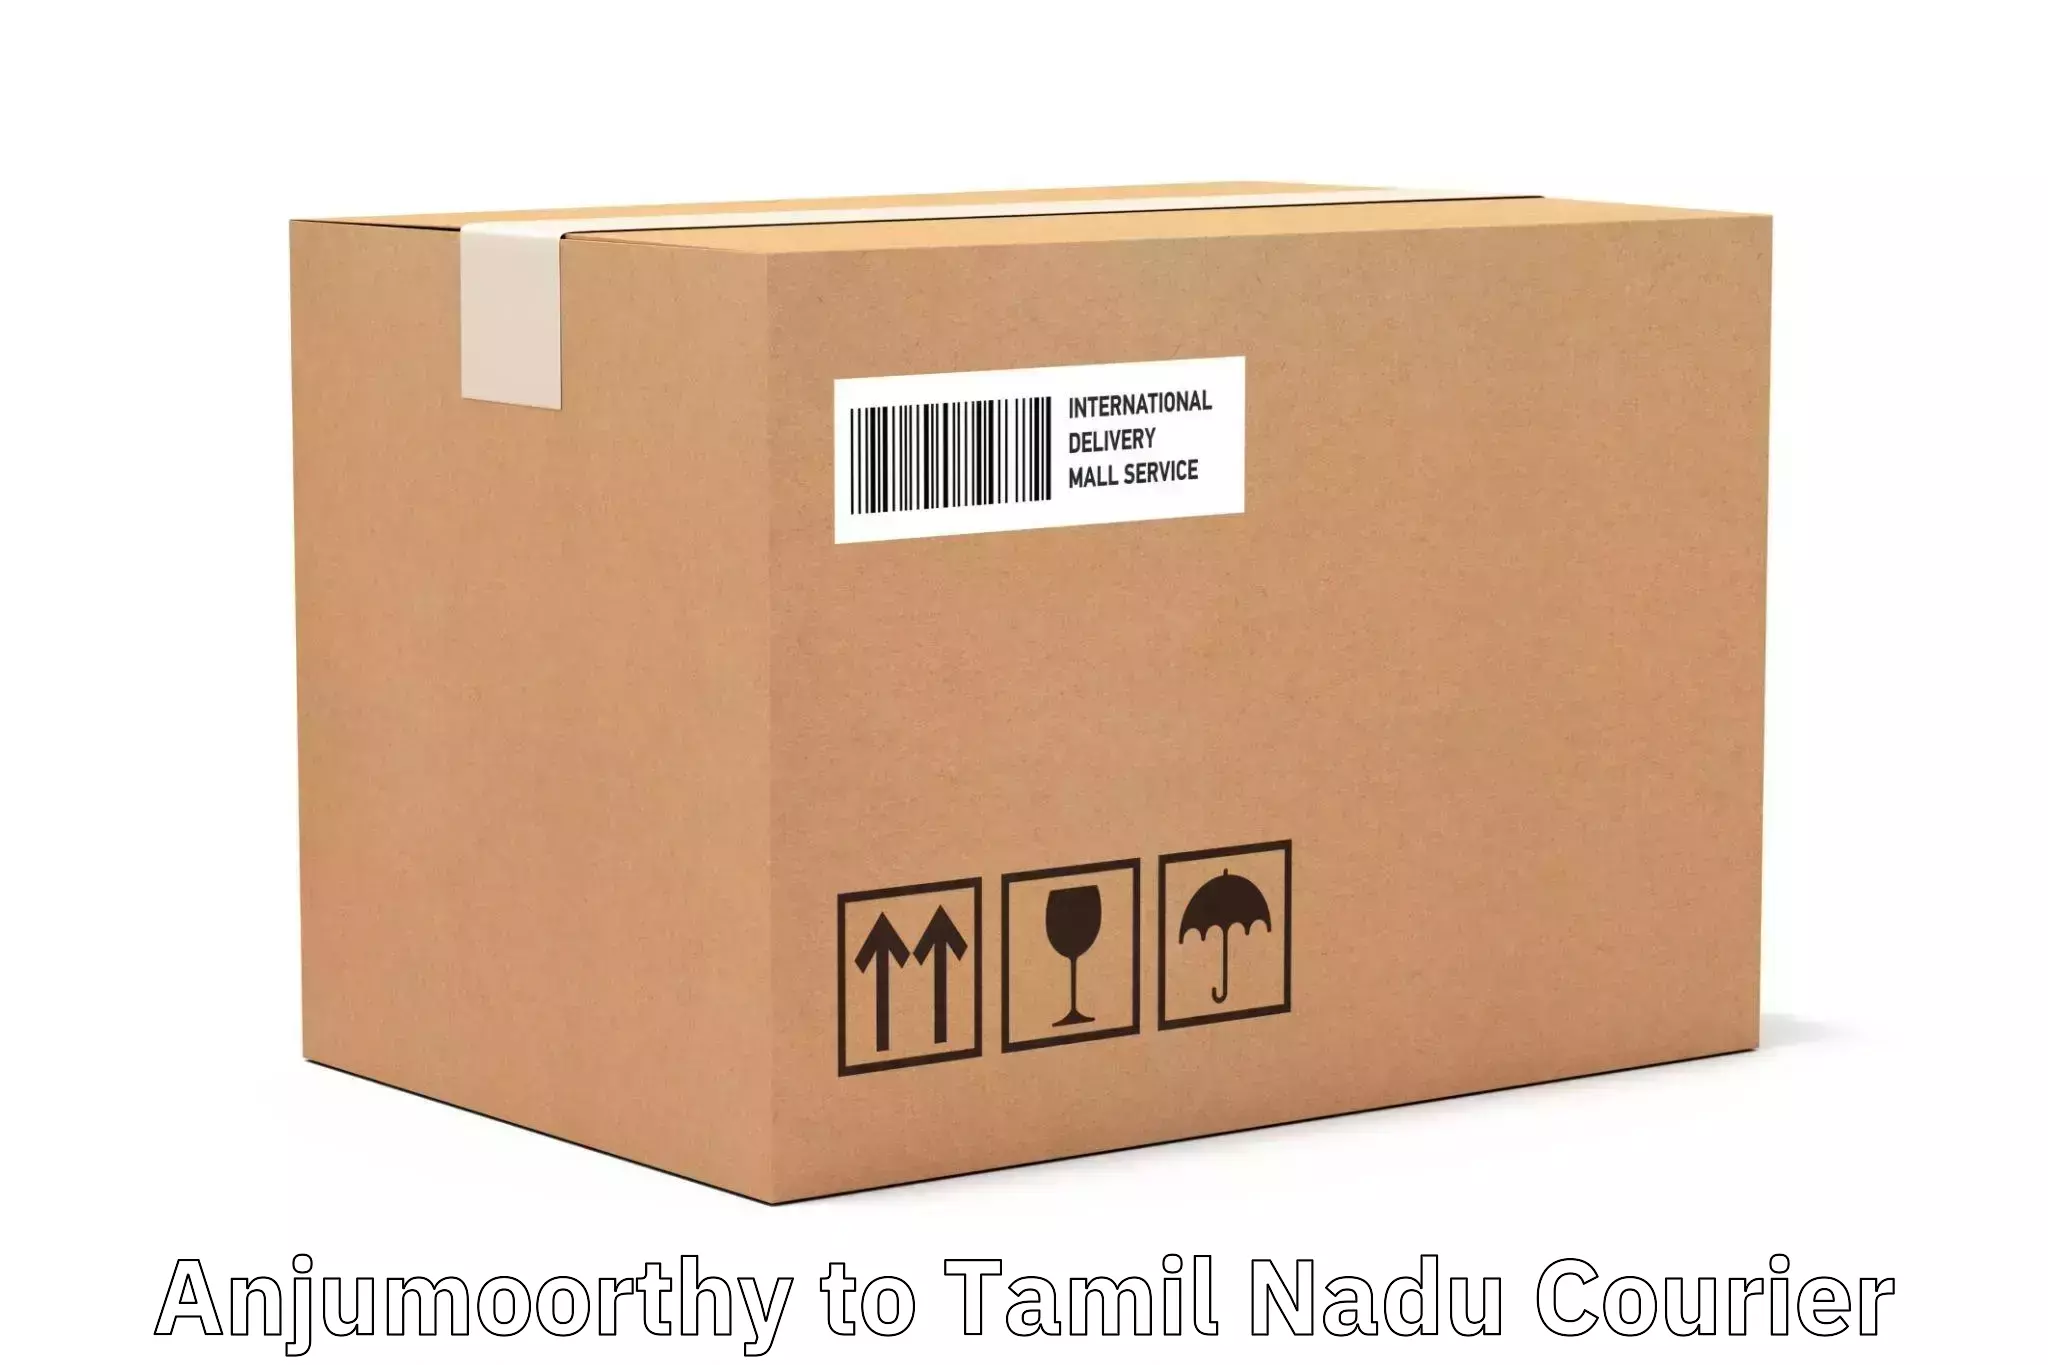 Express delivery capabilities Anjumoorthy to Manamadurai